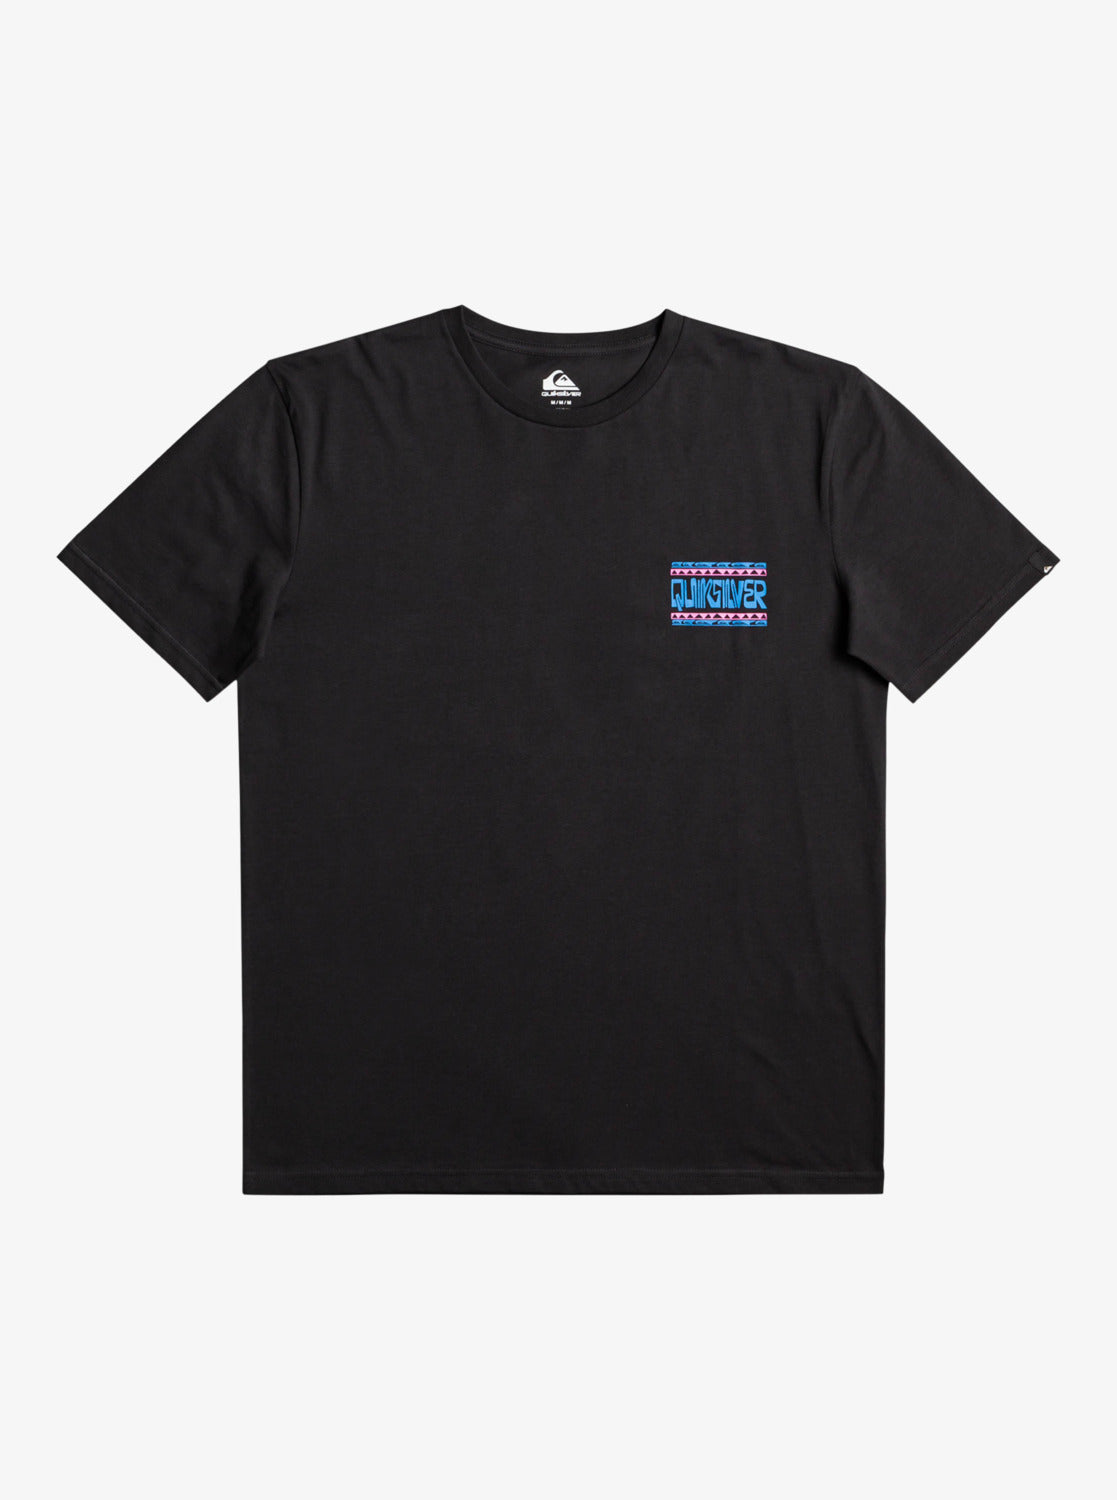 Quiksilver Warped Frames Boys T-Shirt in Black